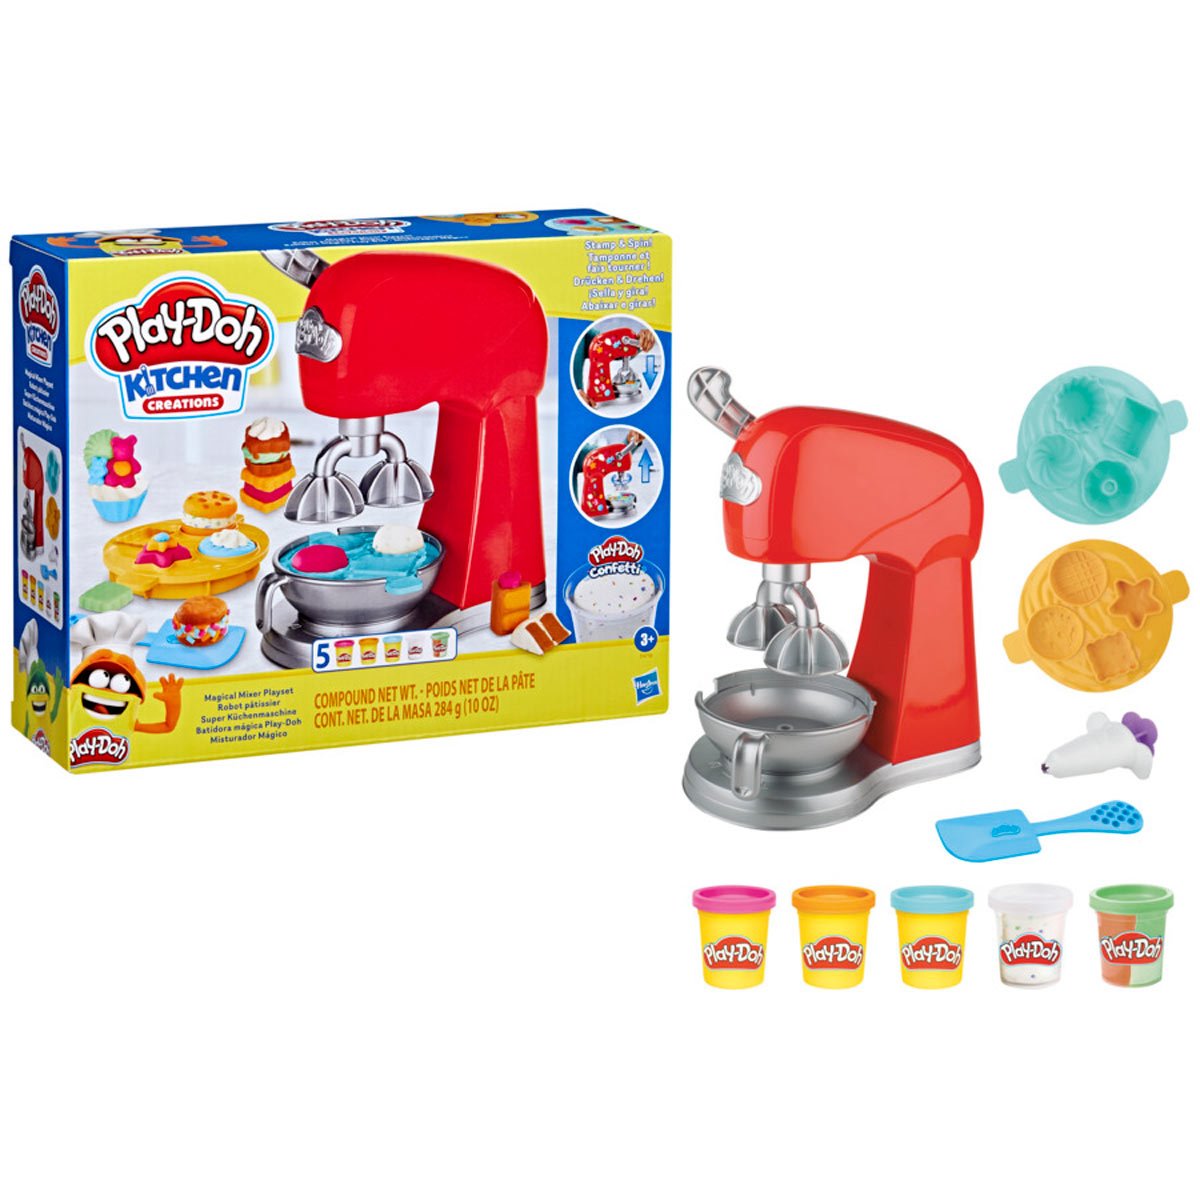 Ubetydelig Afslut utilstrækkelig Play-Doh Kitchen Creations Magical Mixer Playset